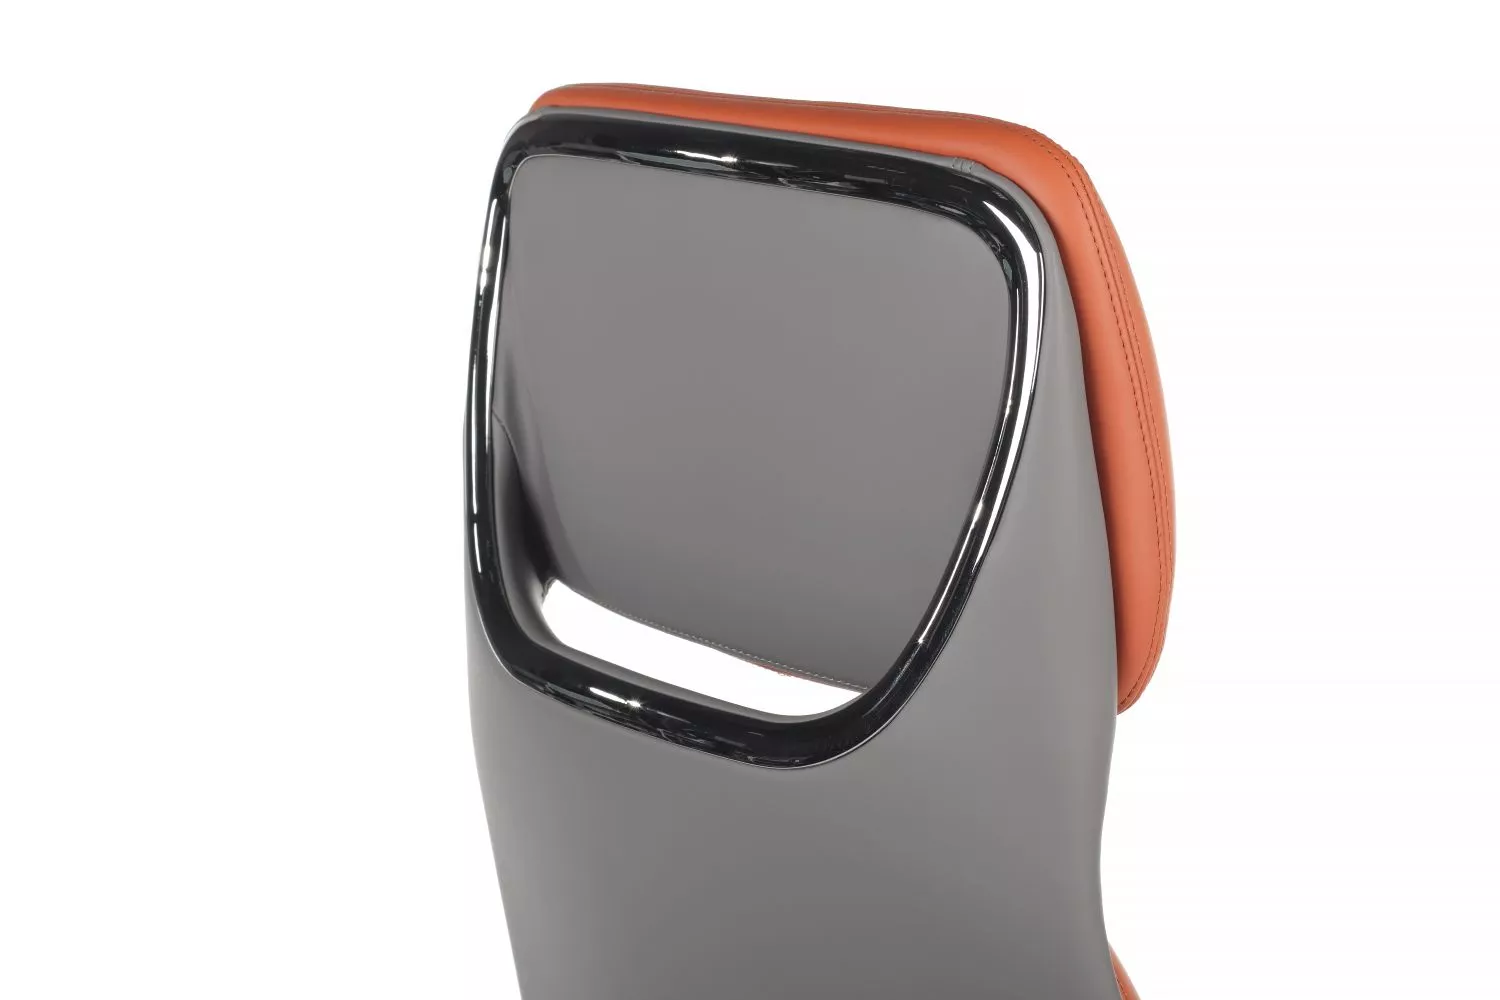 Компьютерное кресло натуральная кожа RIVA DESIGN Napoli (YZPN-YR020) оранжевый / серый